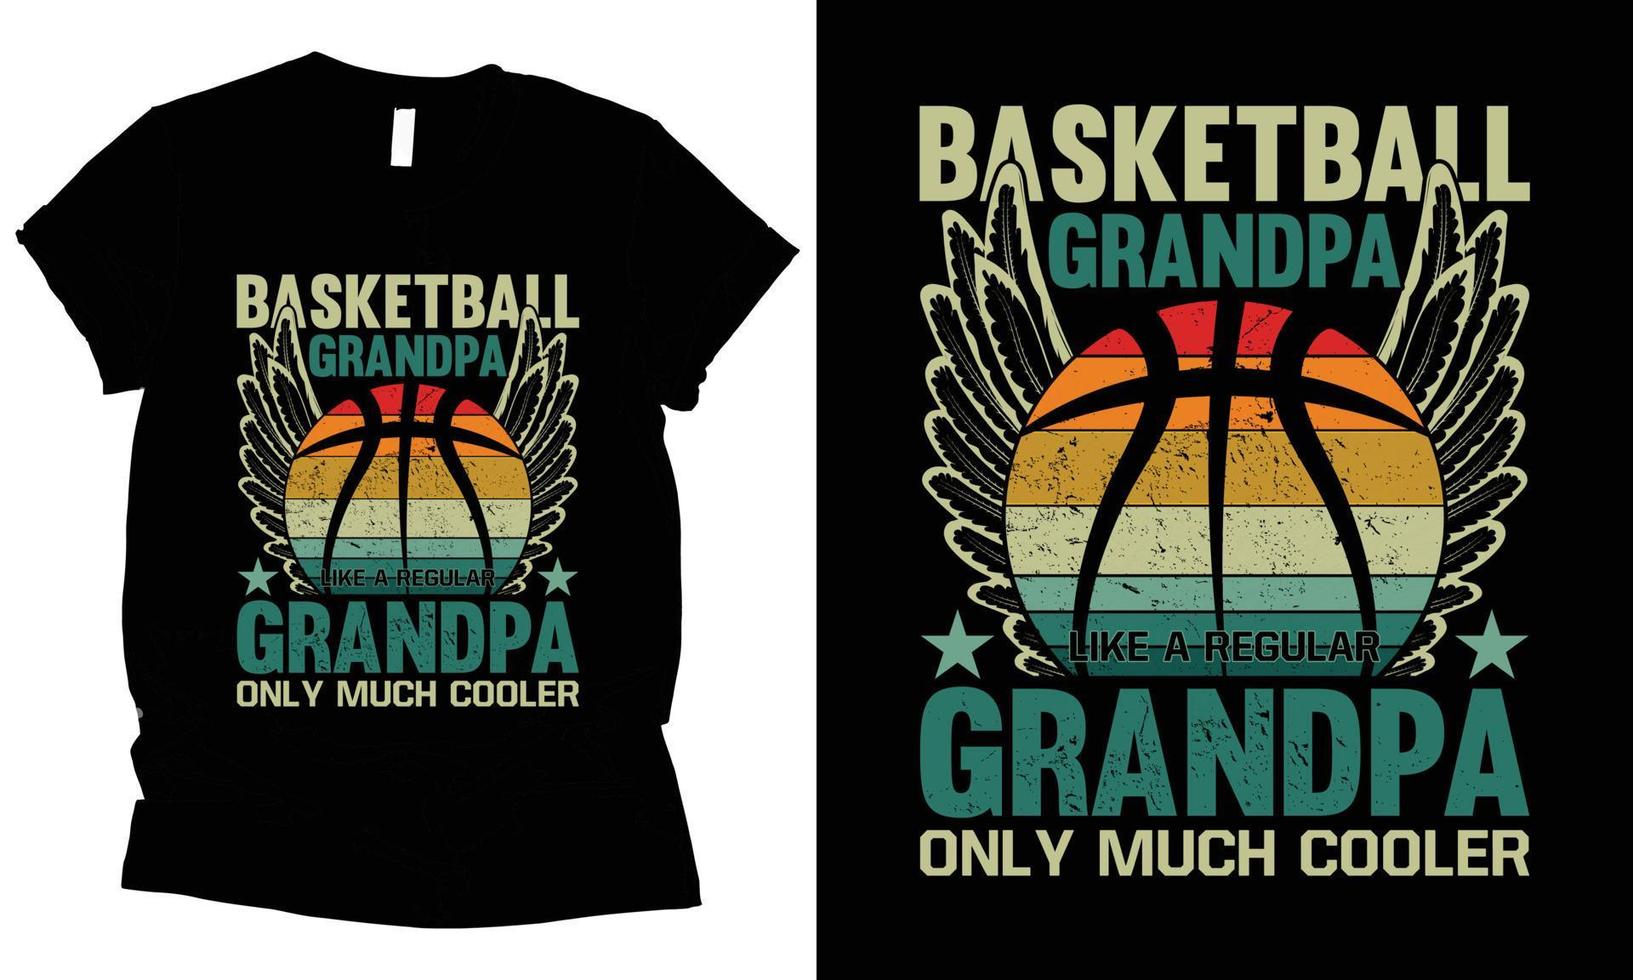 Basketball grandpa like a regular grandpa only much cooler vintage t-shirt design. vector